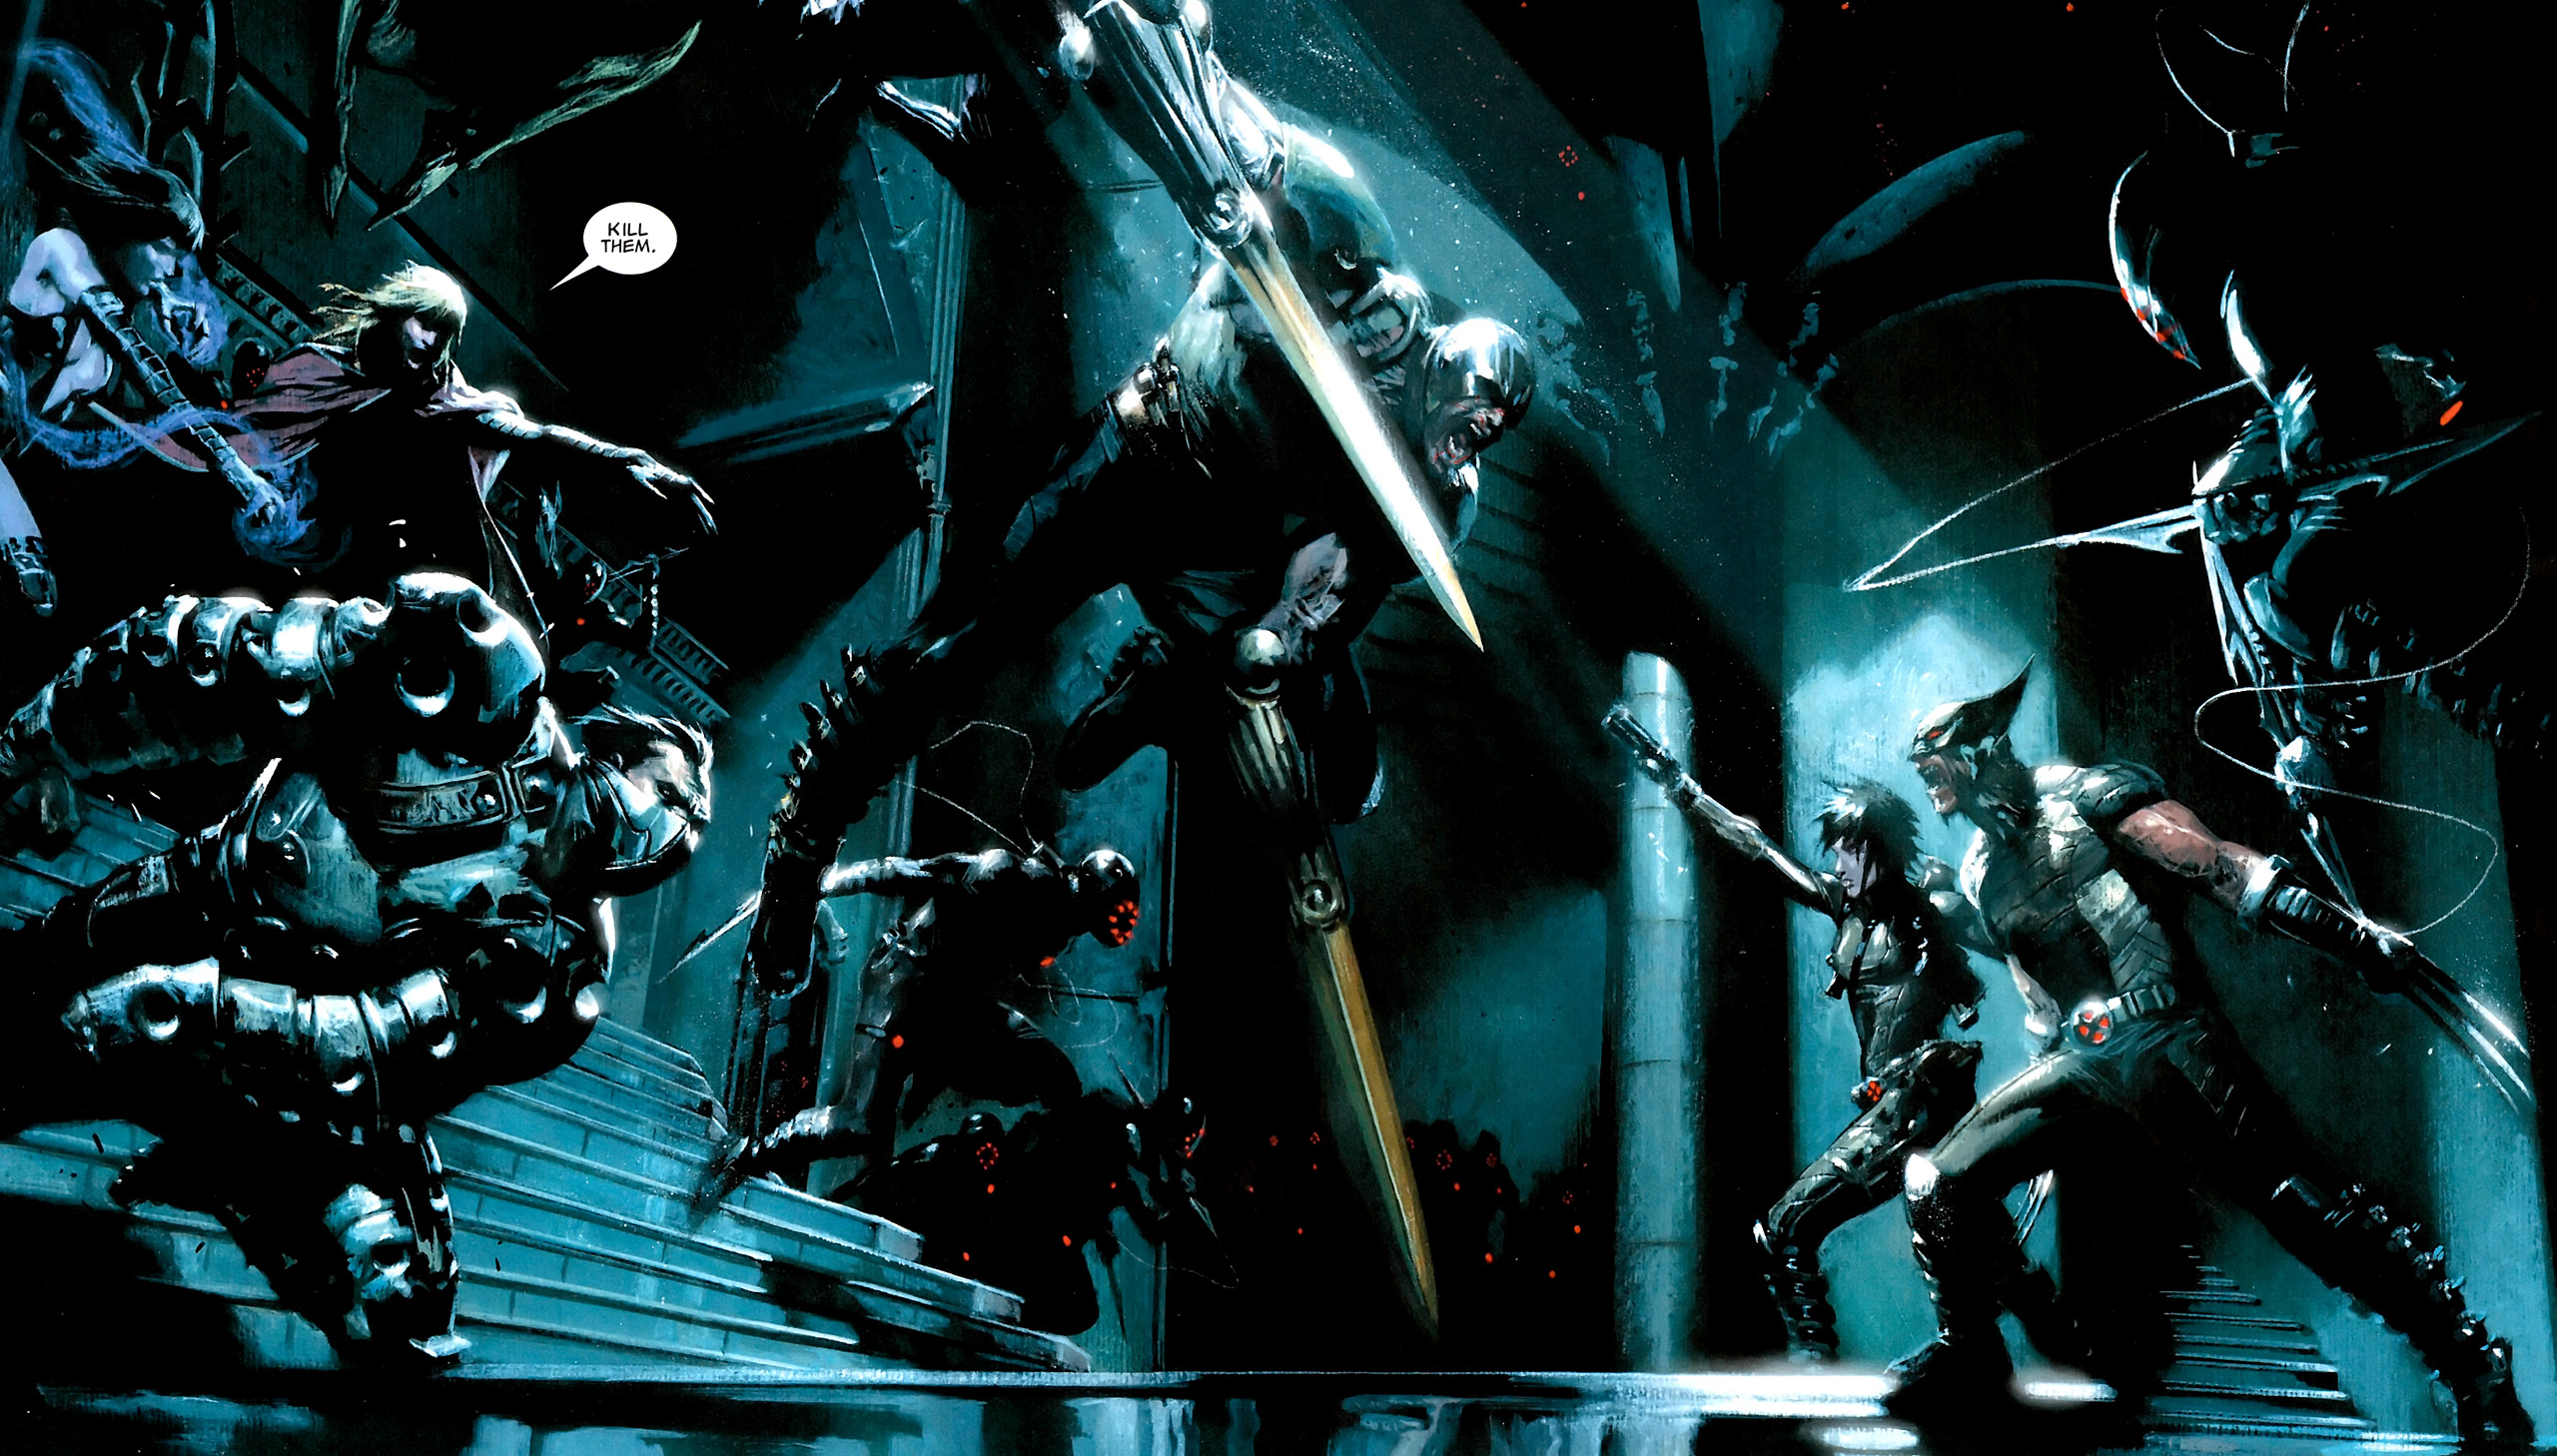 Comics X-Force HD Wallpaper | Background Image